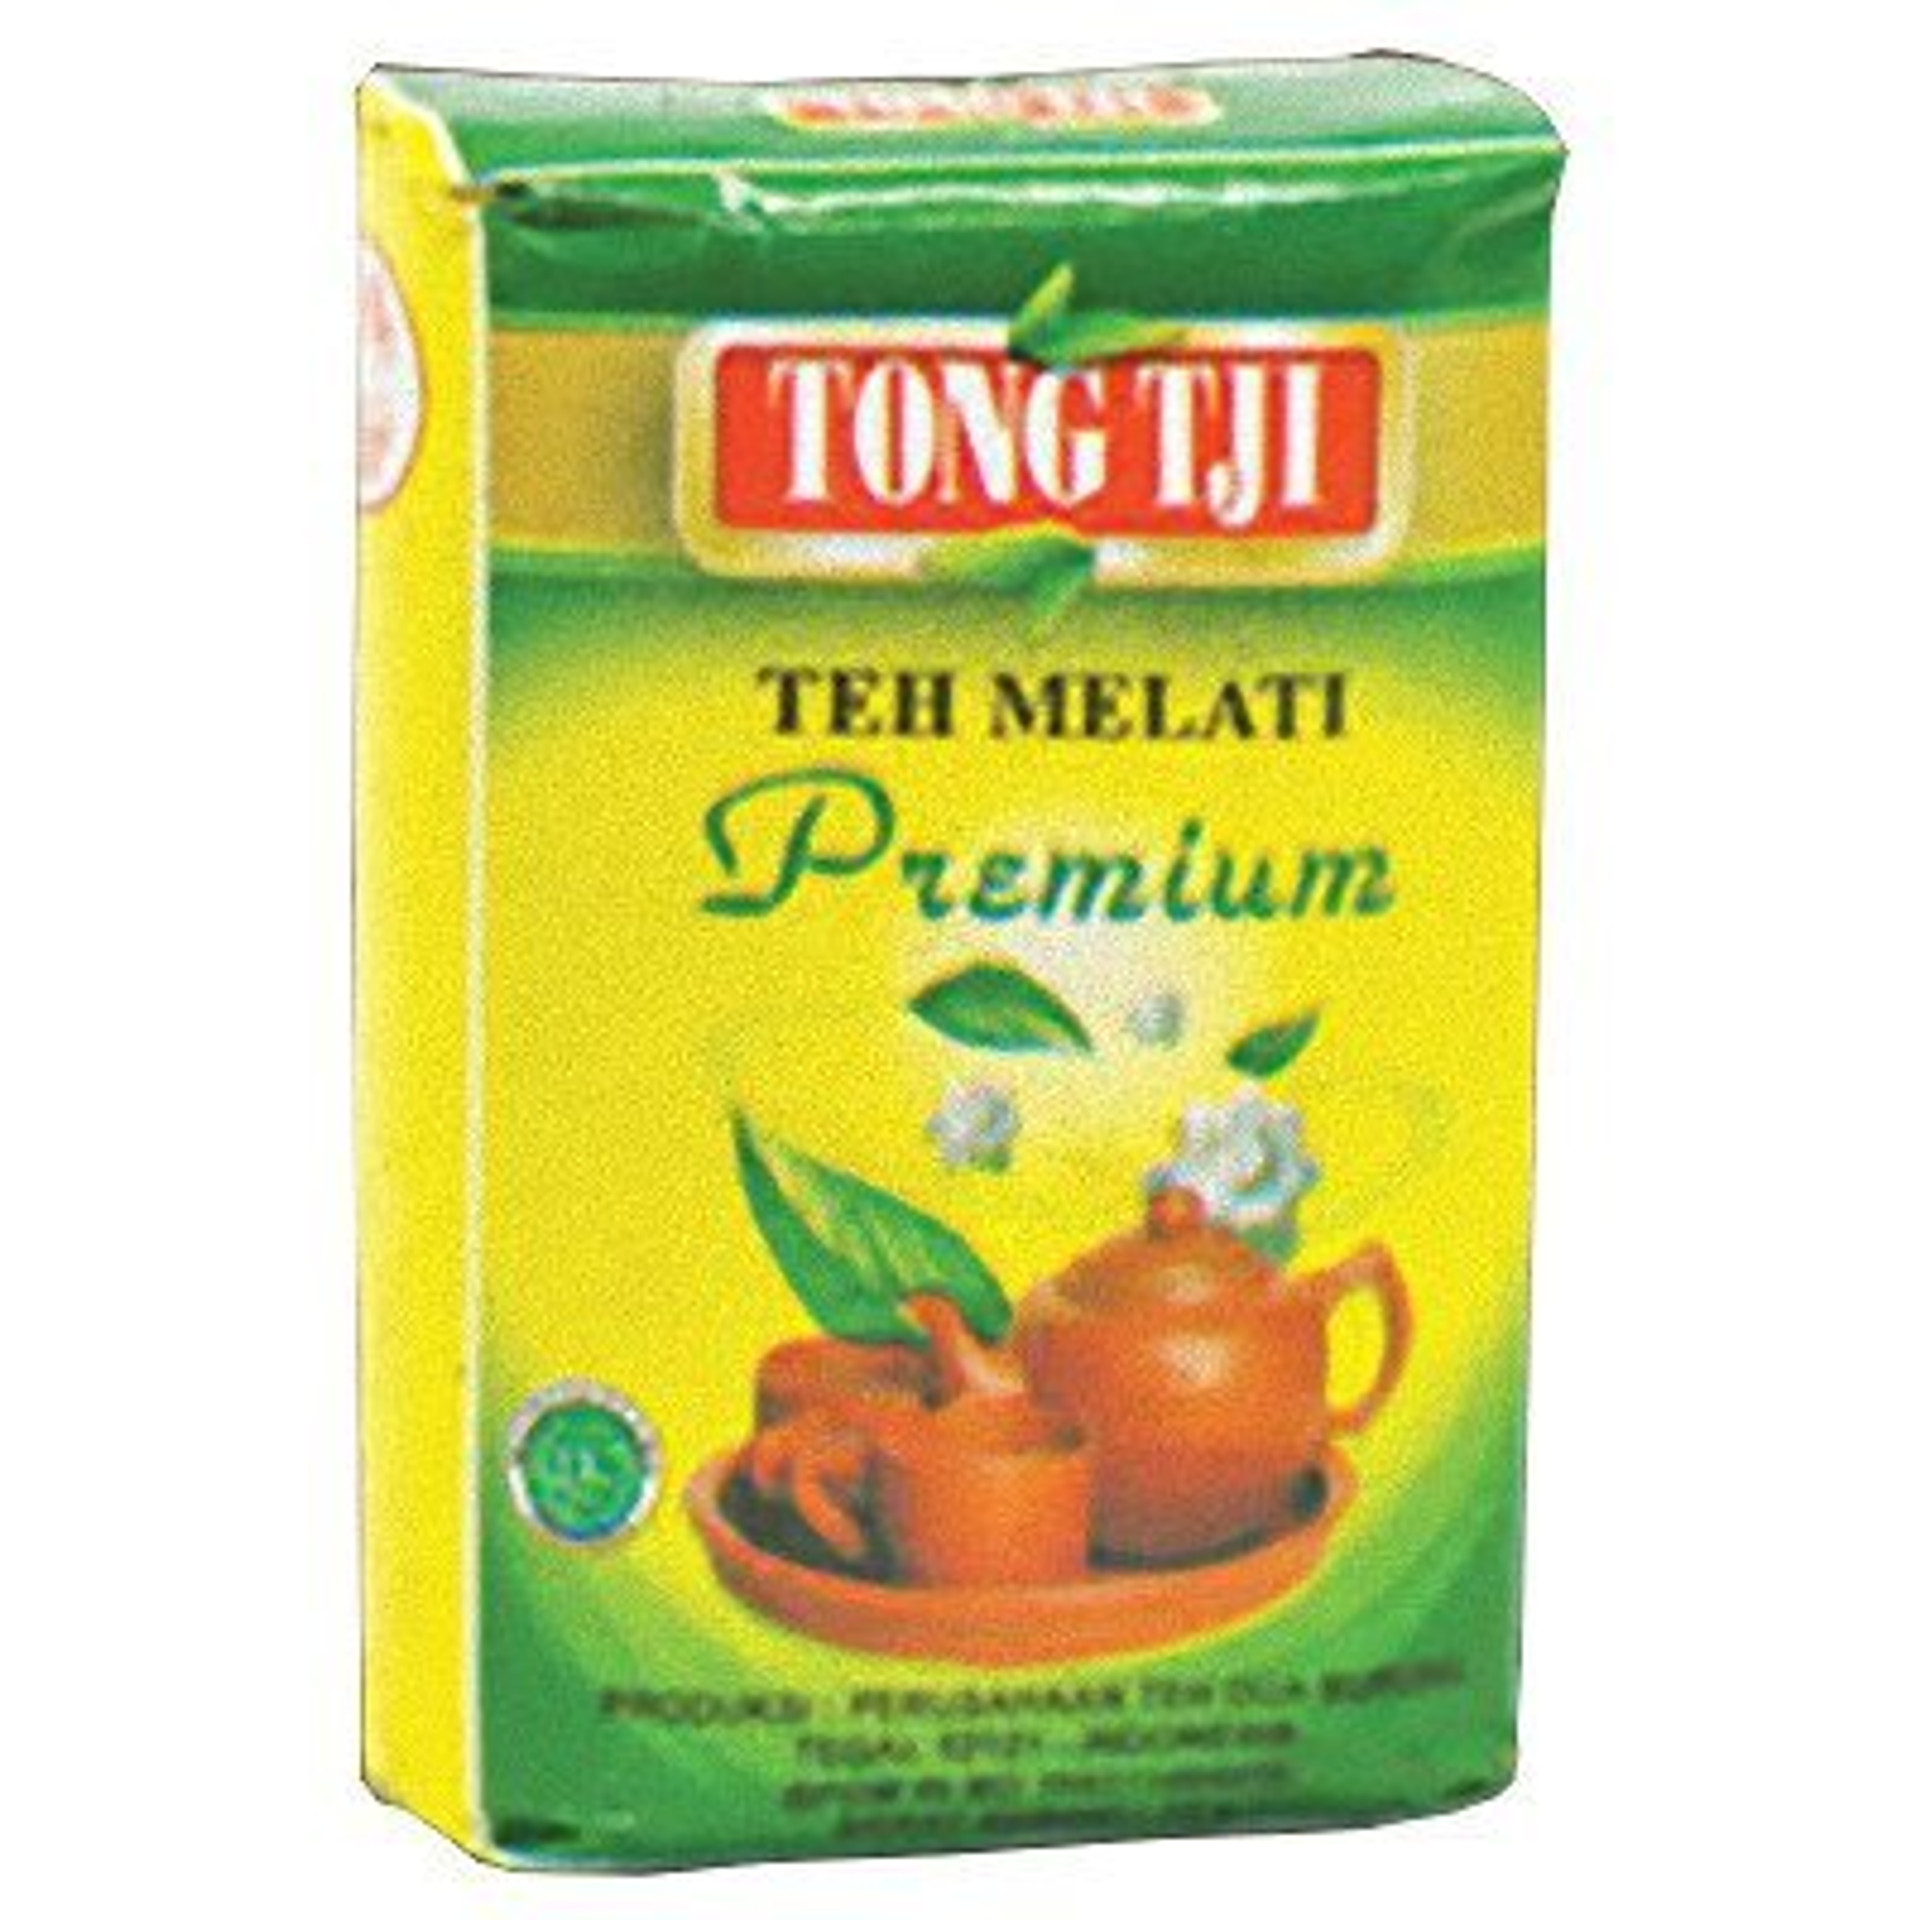 Tong Tji Premium Jasmine Tea, 100 Gram (10 x 10gr) - UD Jawa Berkah Makmur